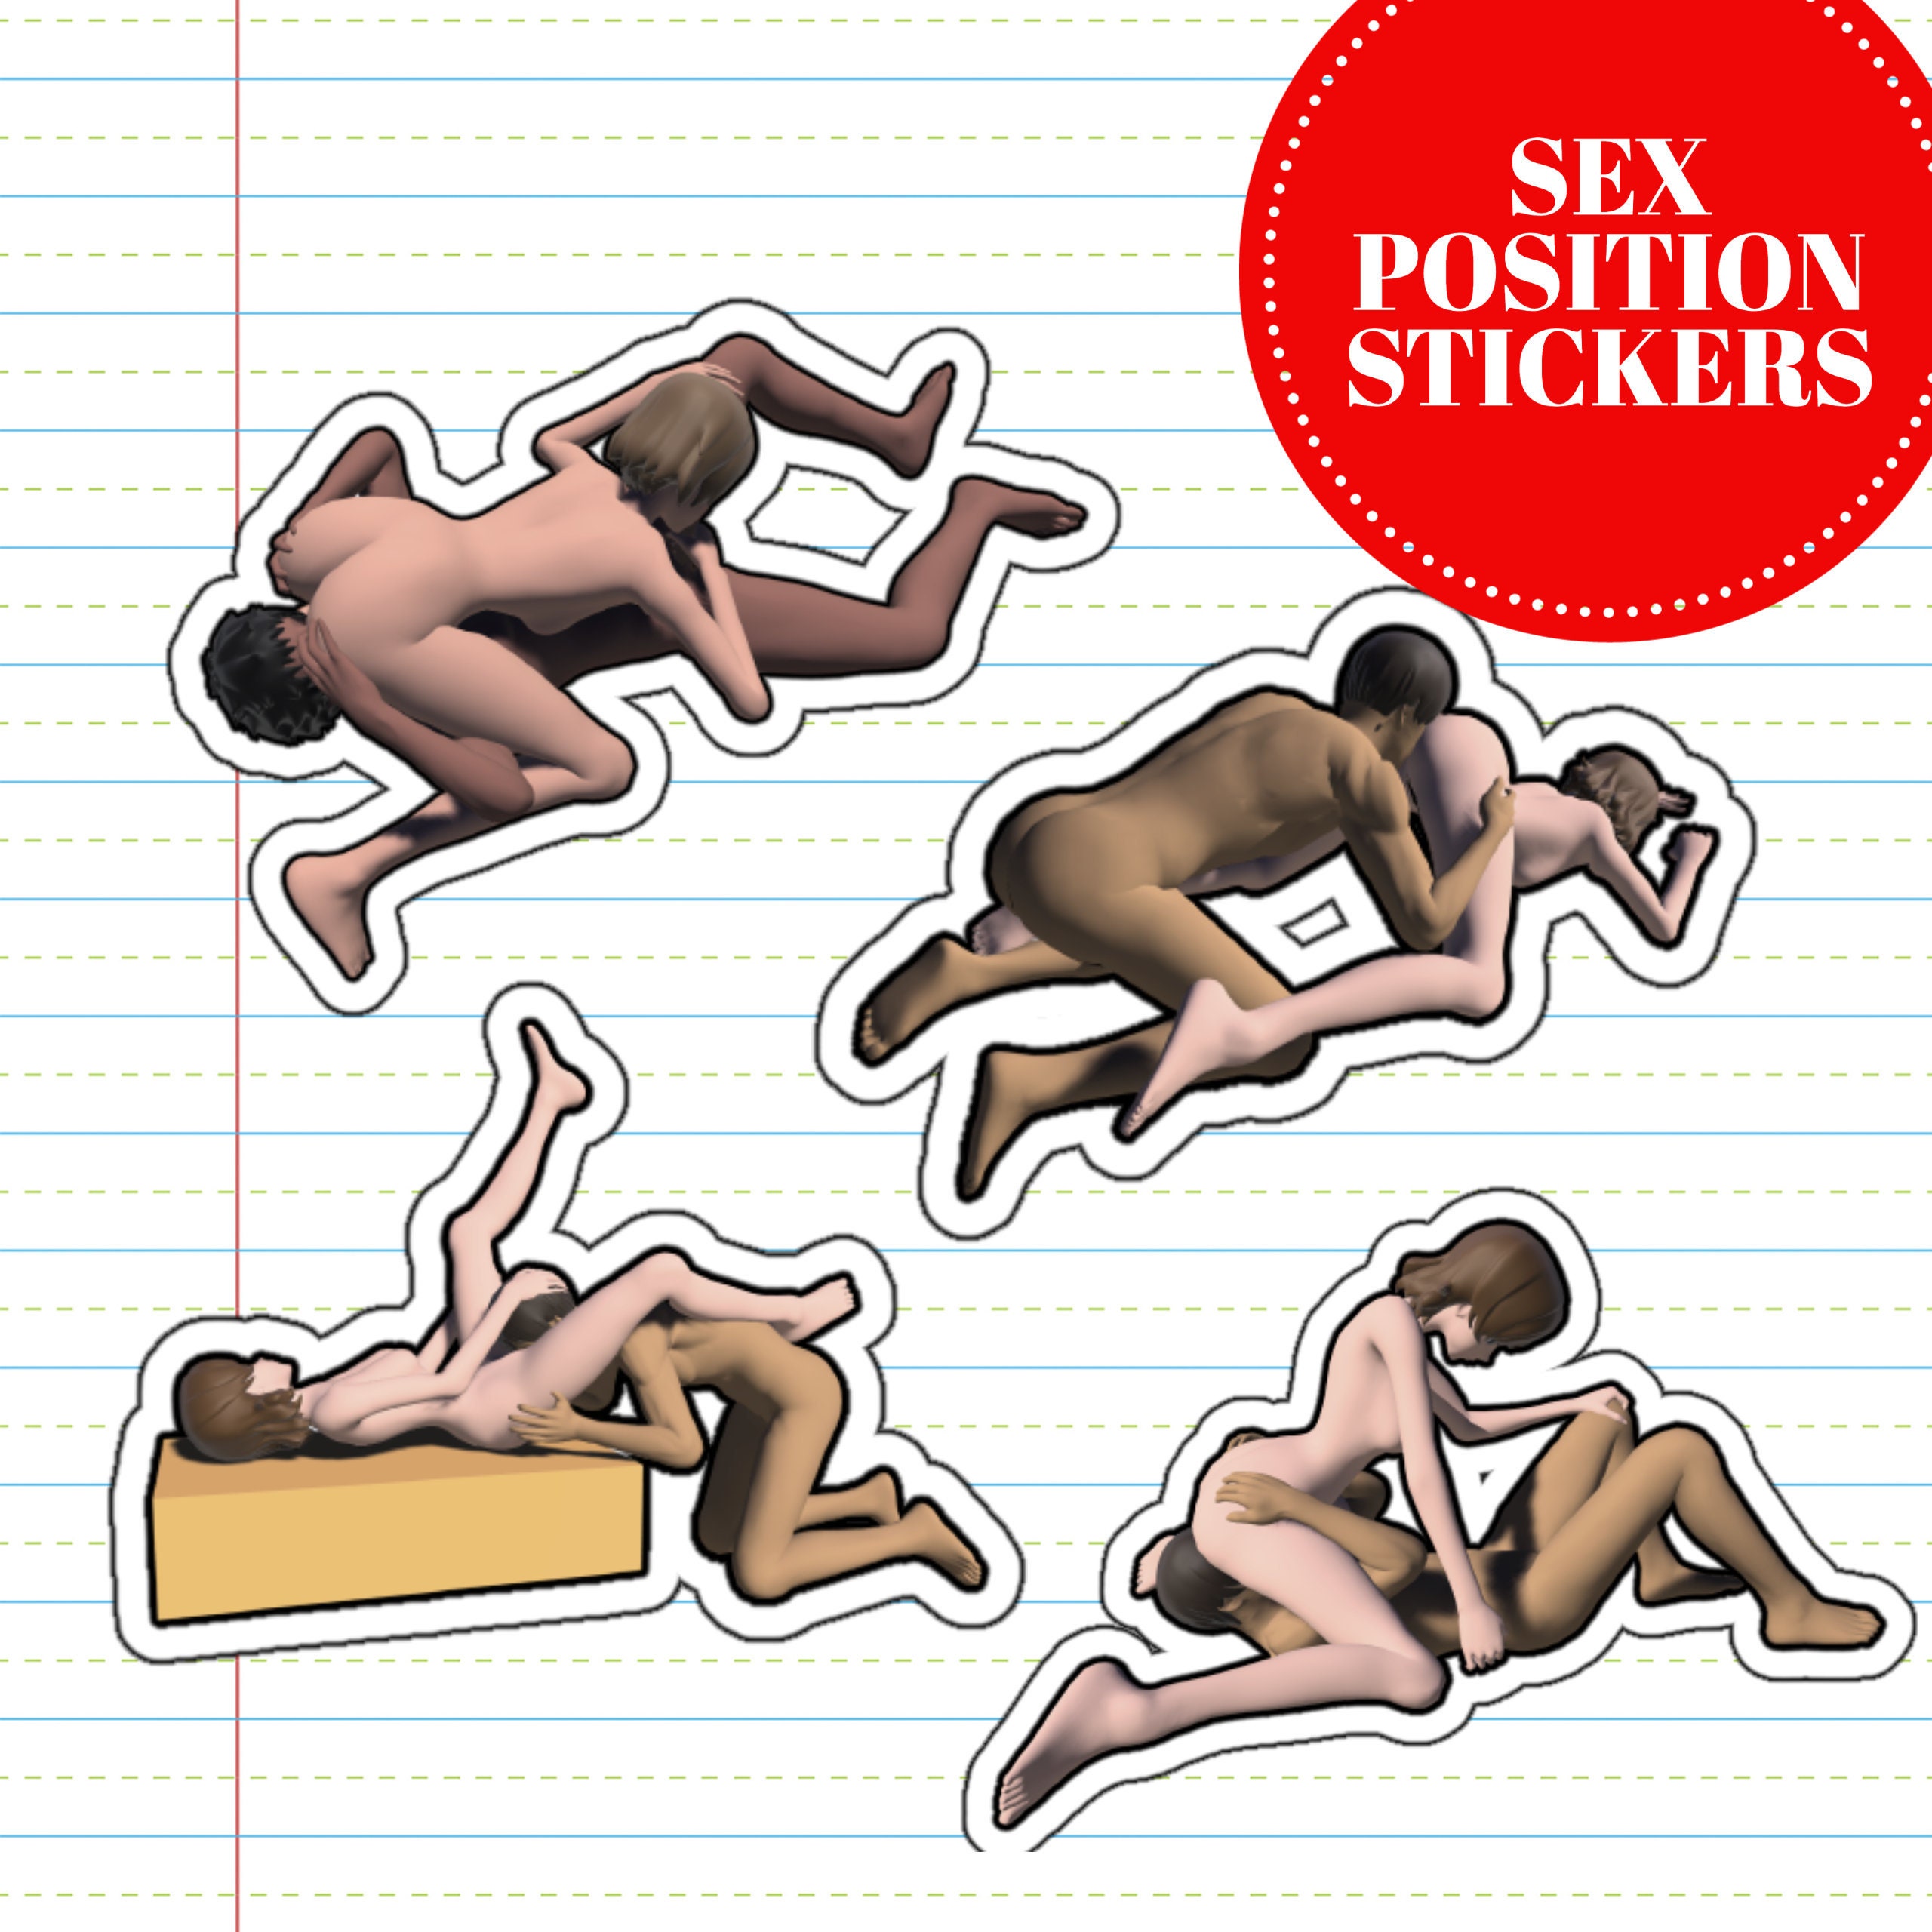 Sticker pornos para whatsapp